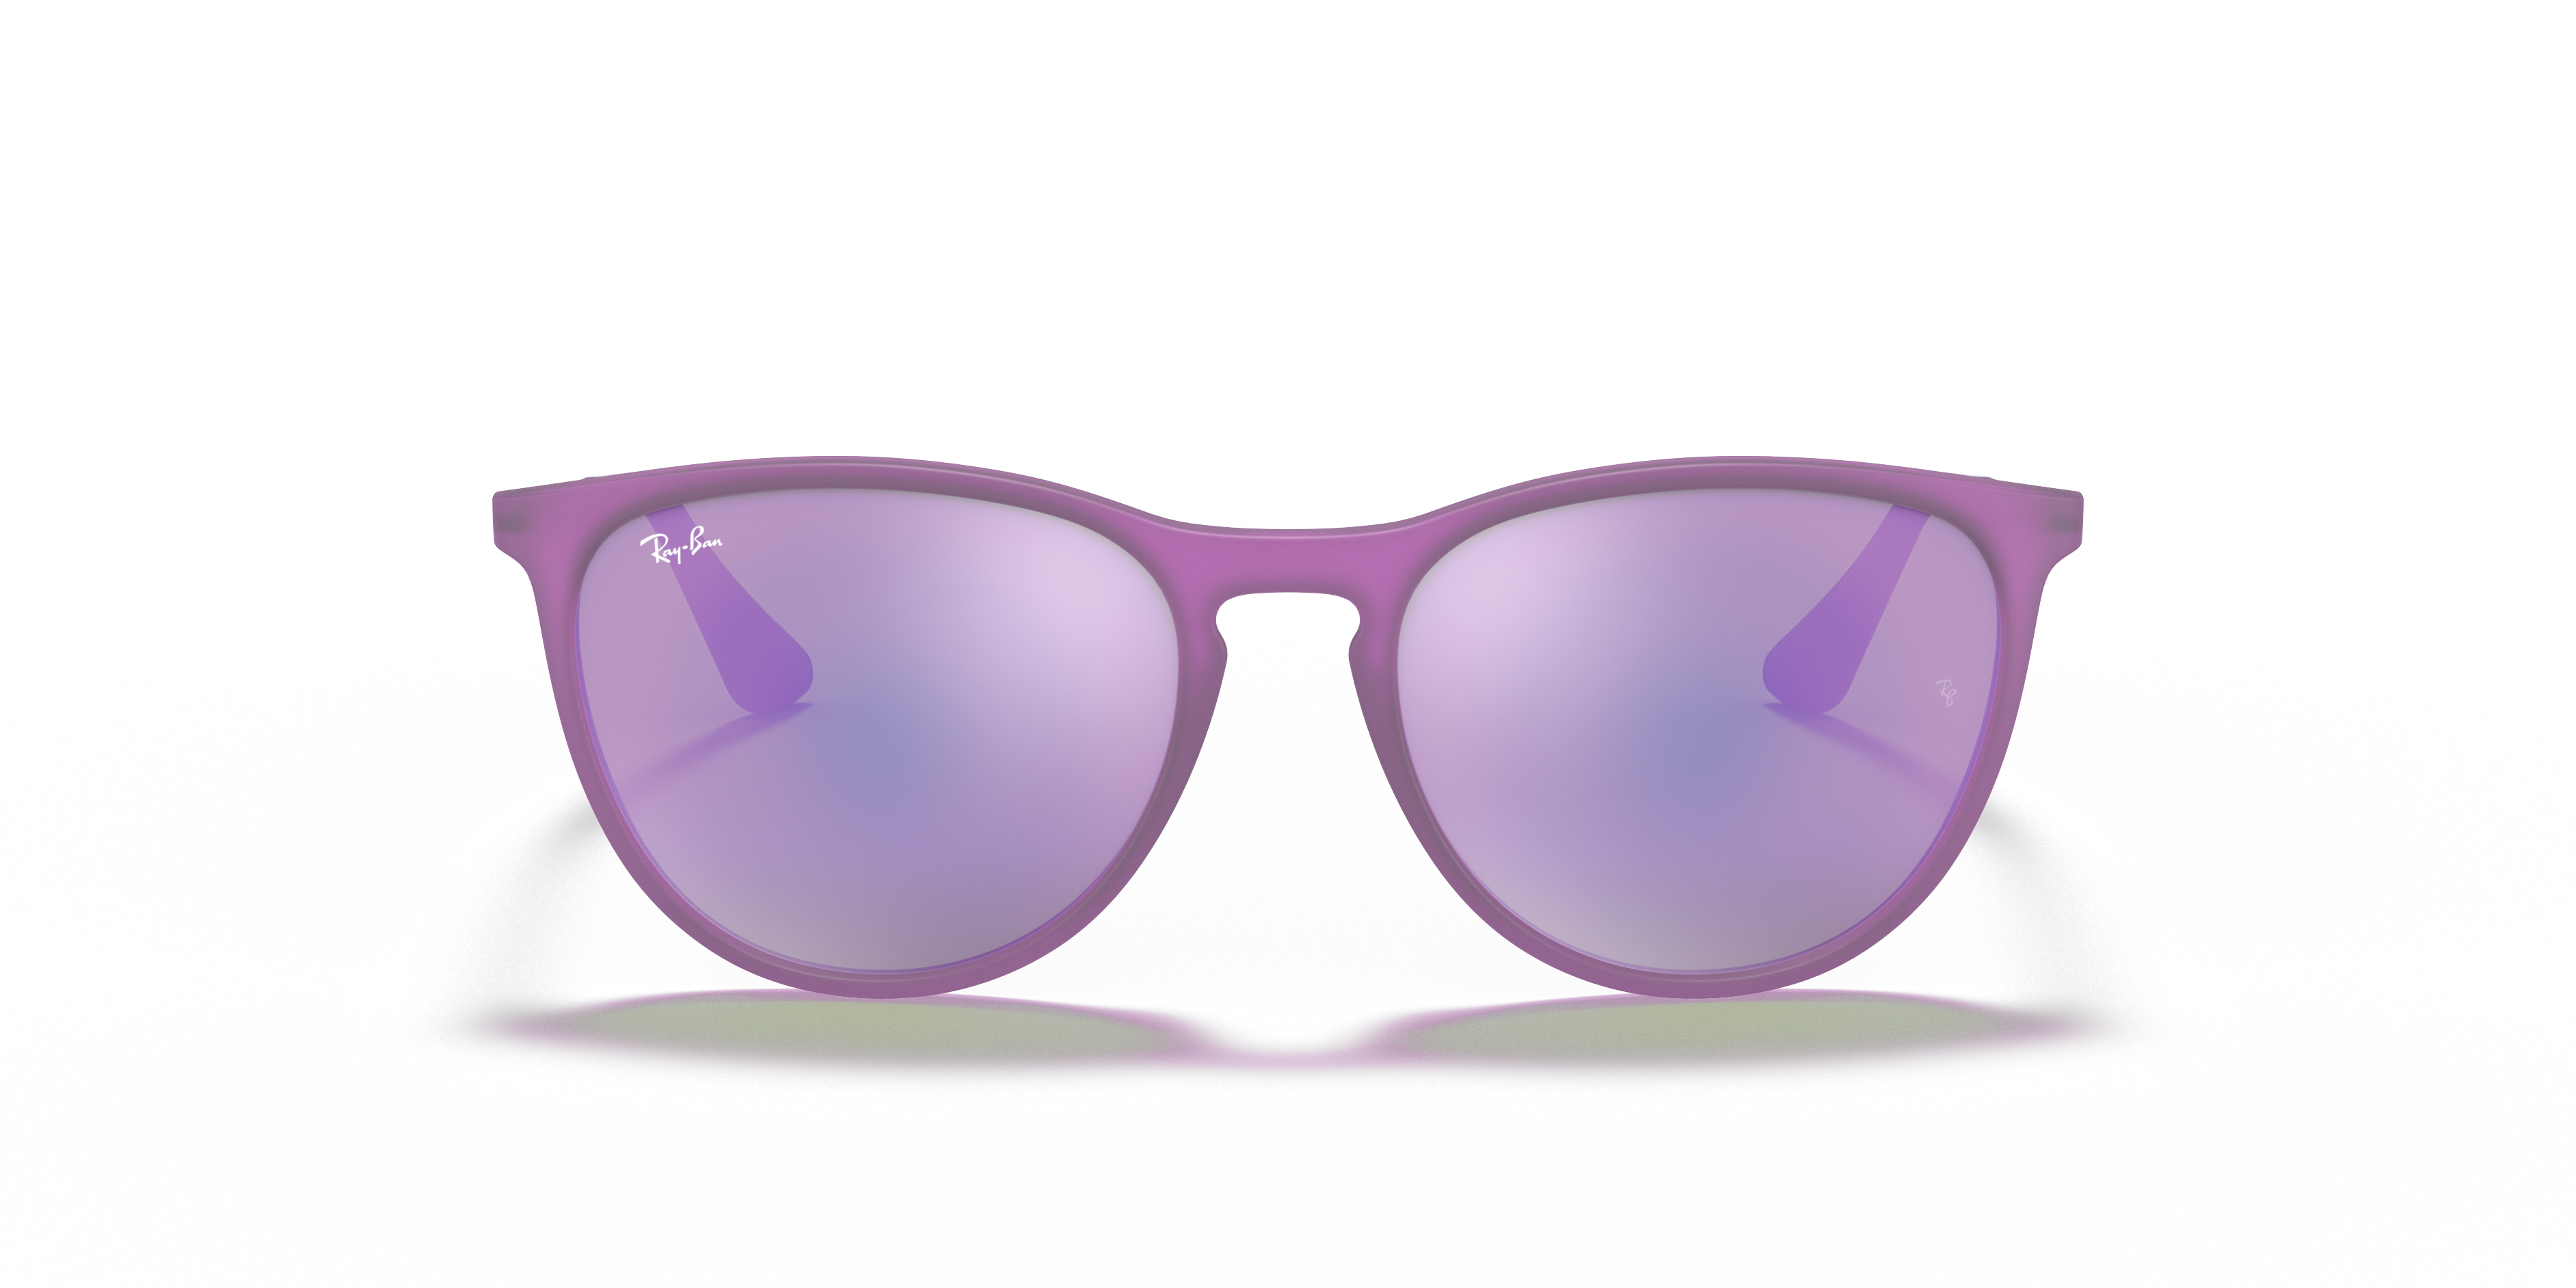 Buy Retro Rewind Rubberized Frame Kids Sunglasses - Classic Design Toddler  & Kid Sunglasses - Comfortable, Unbreakable UV400 Sun Glasses for Boys &  Girls Age 3-12 at Amazon.in